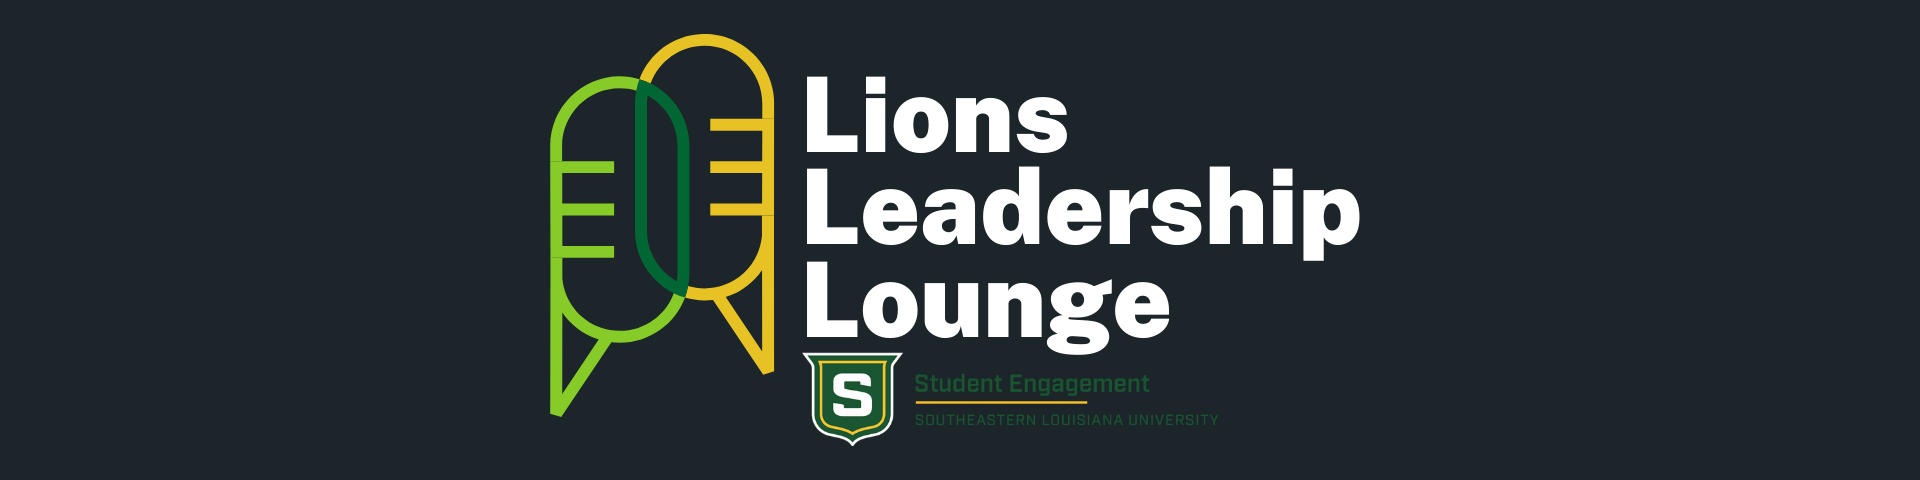 Lions Leadership Lounge Logo